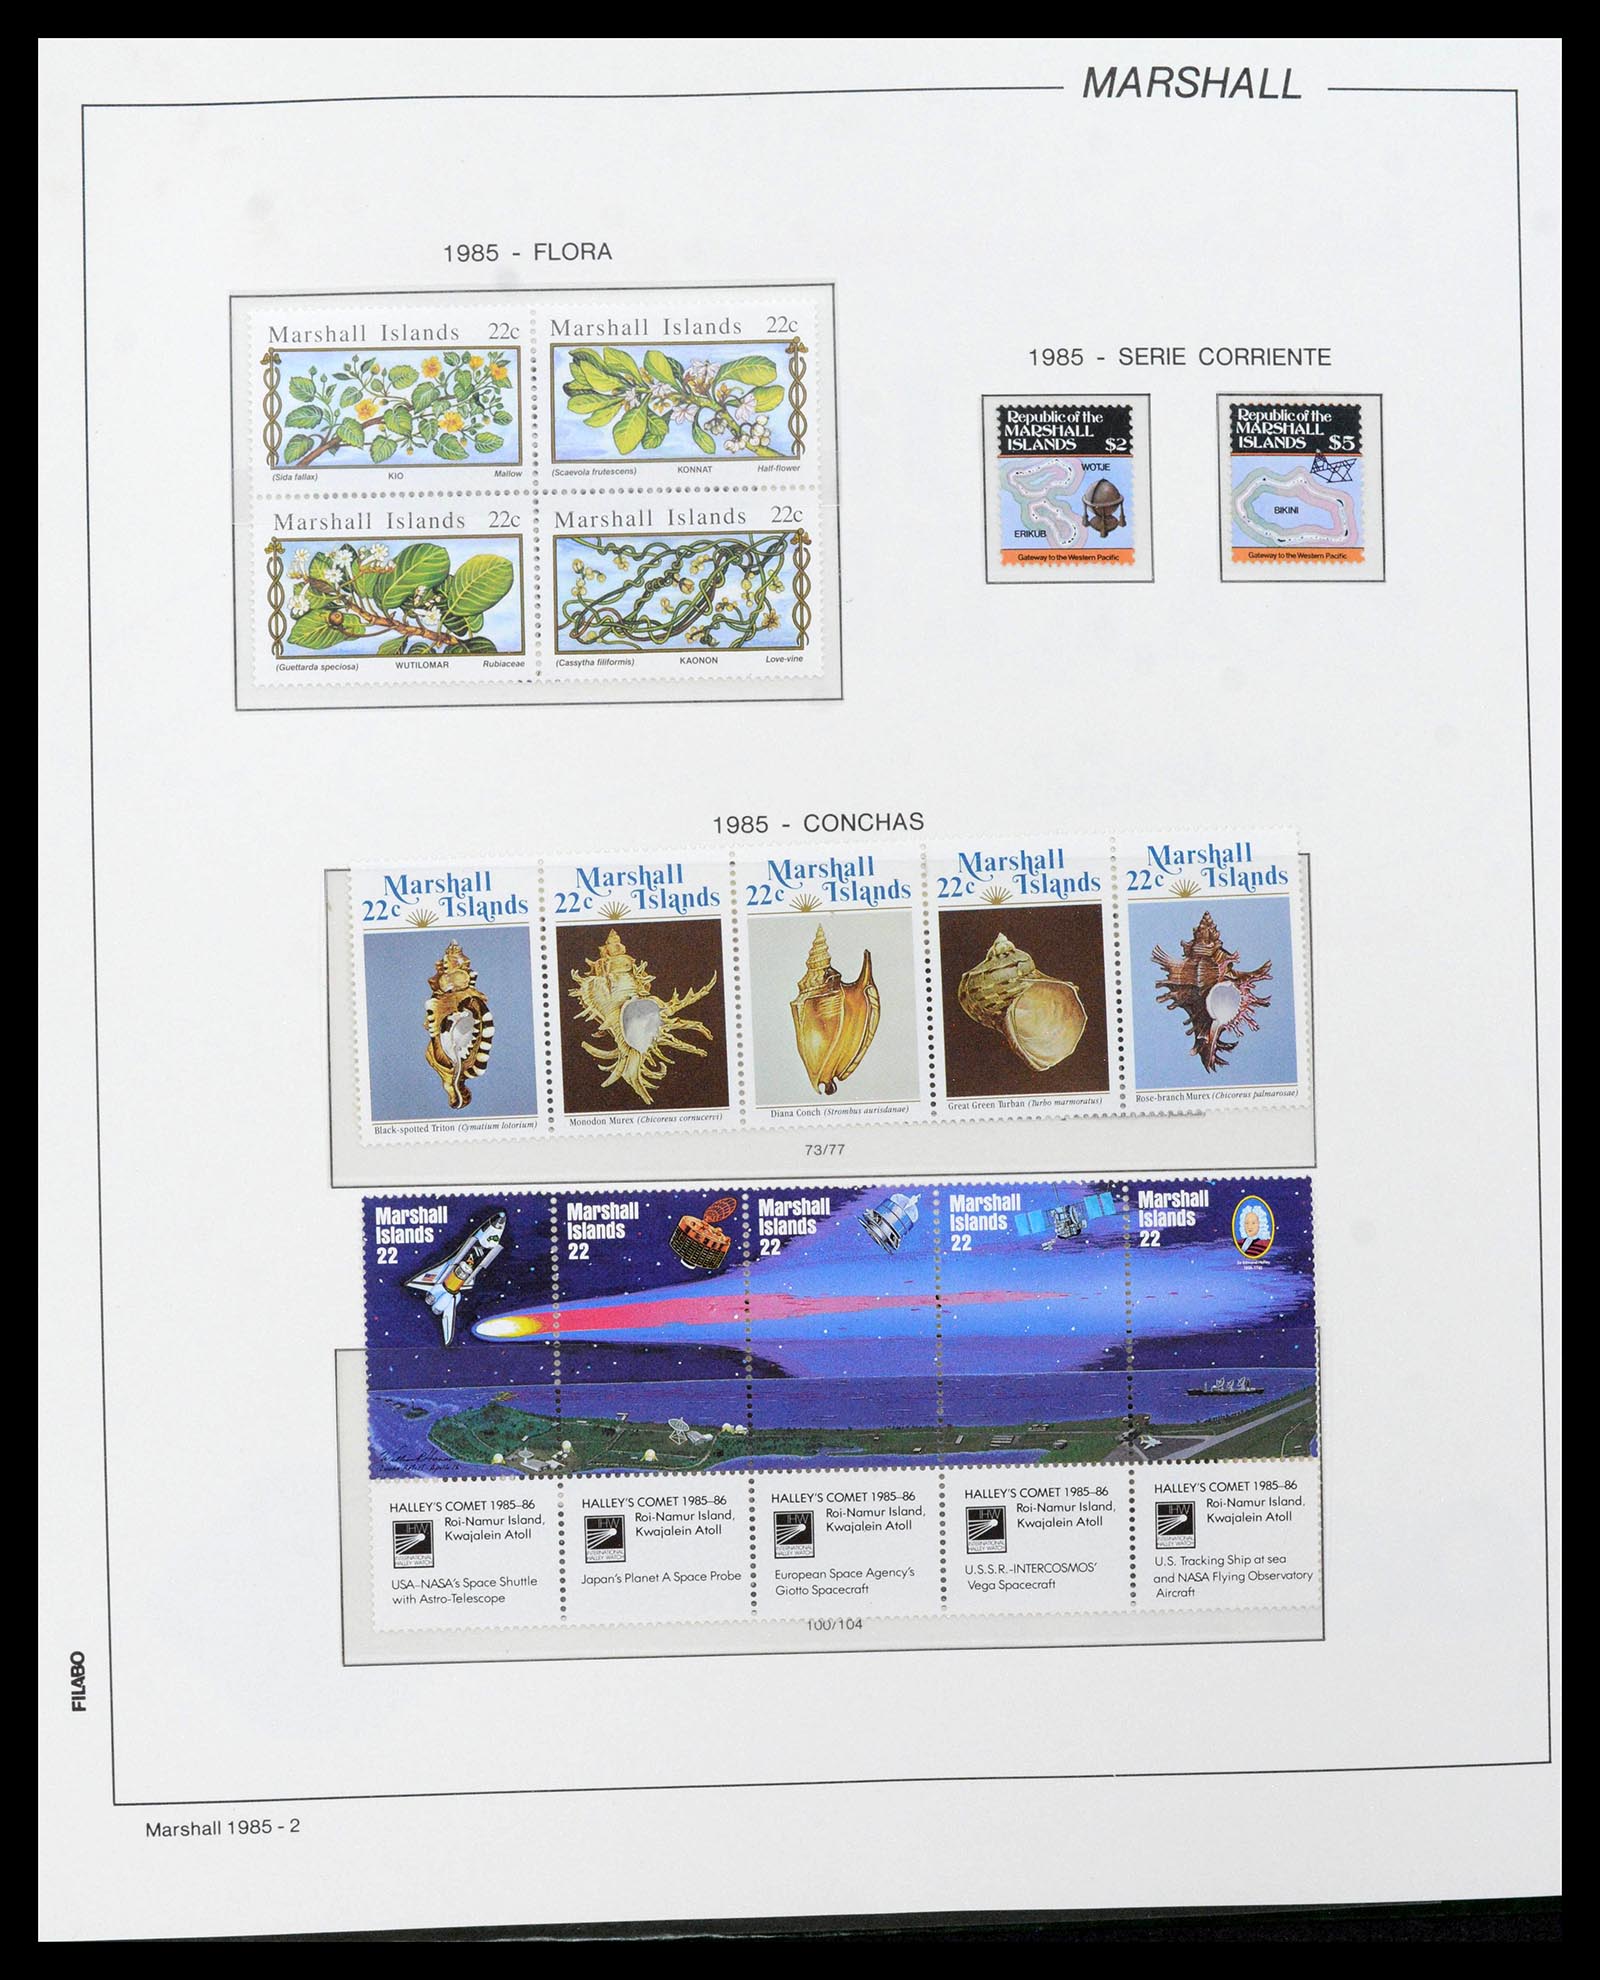 39222 0117 - Stamp collection 39222 Palau, Micronesia and Marshall islands 1980-1995.